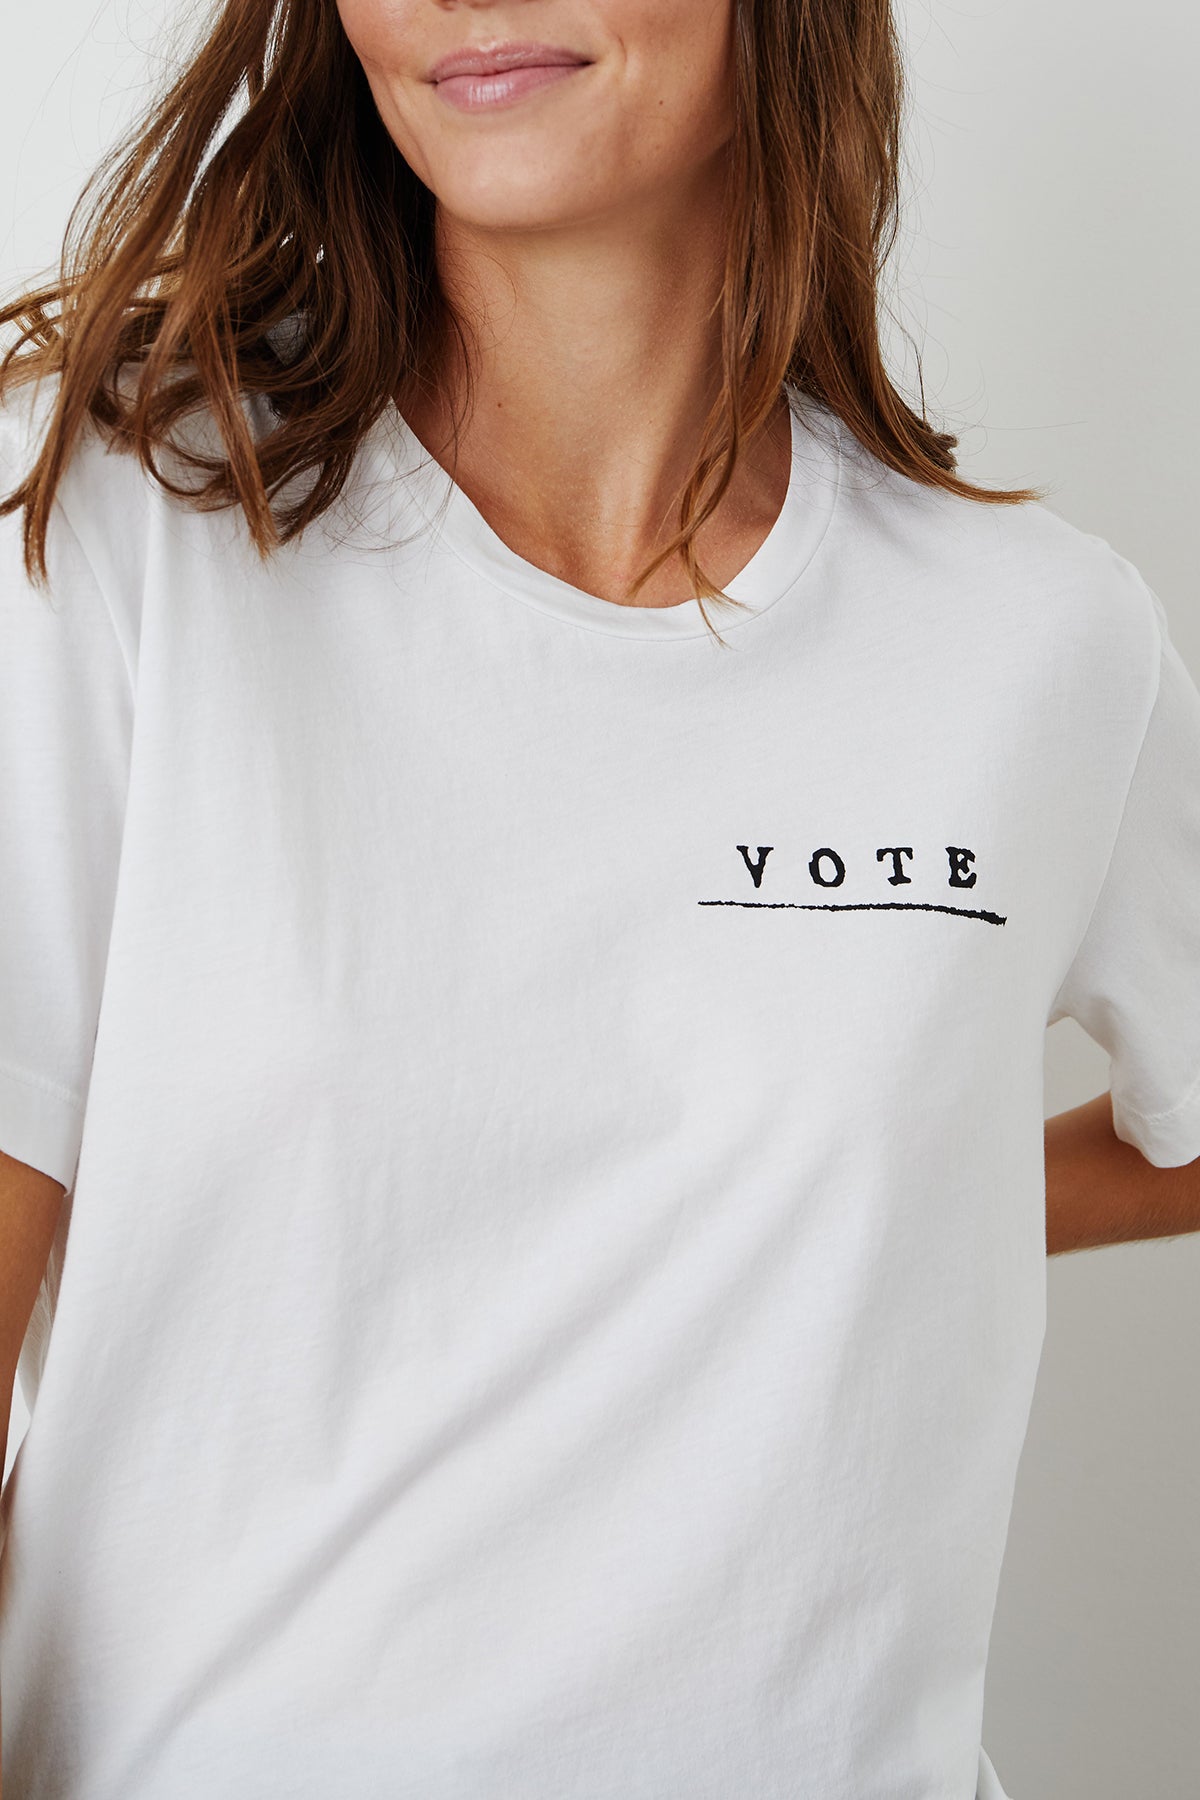   VOTE Unisex Tee in White with Black Vote text 